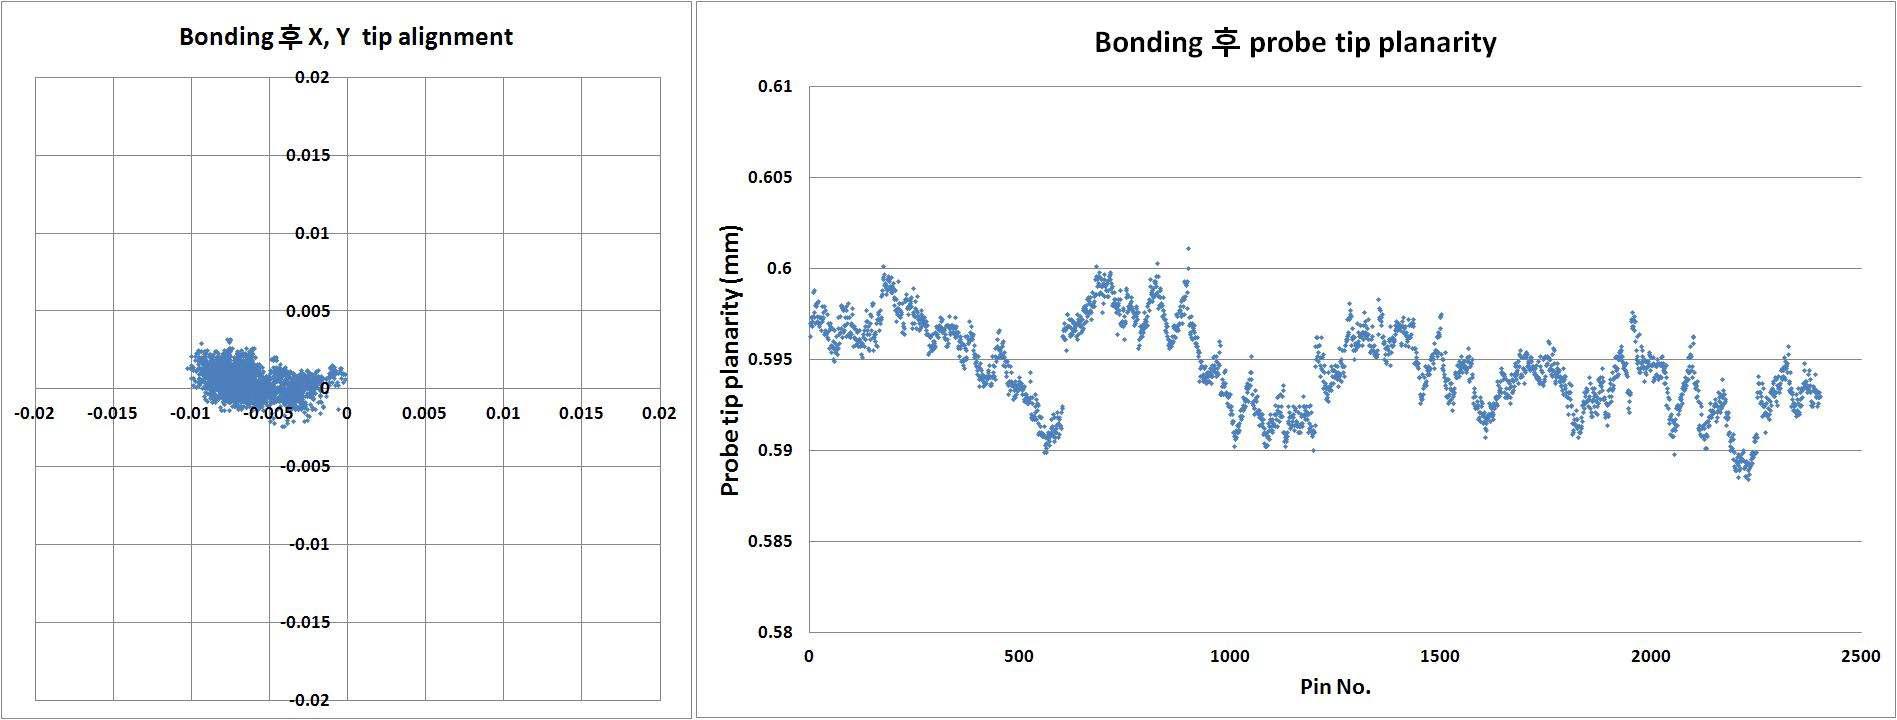 Probe array bonding 후의 probe tip alignment 및 planarity.